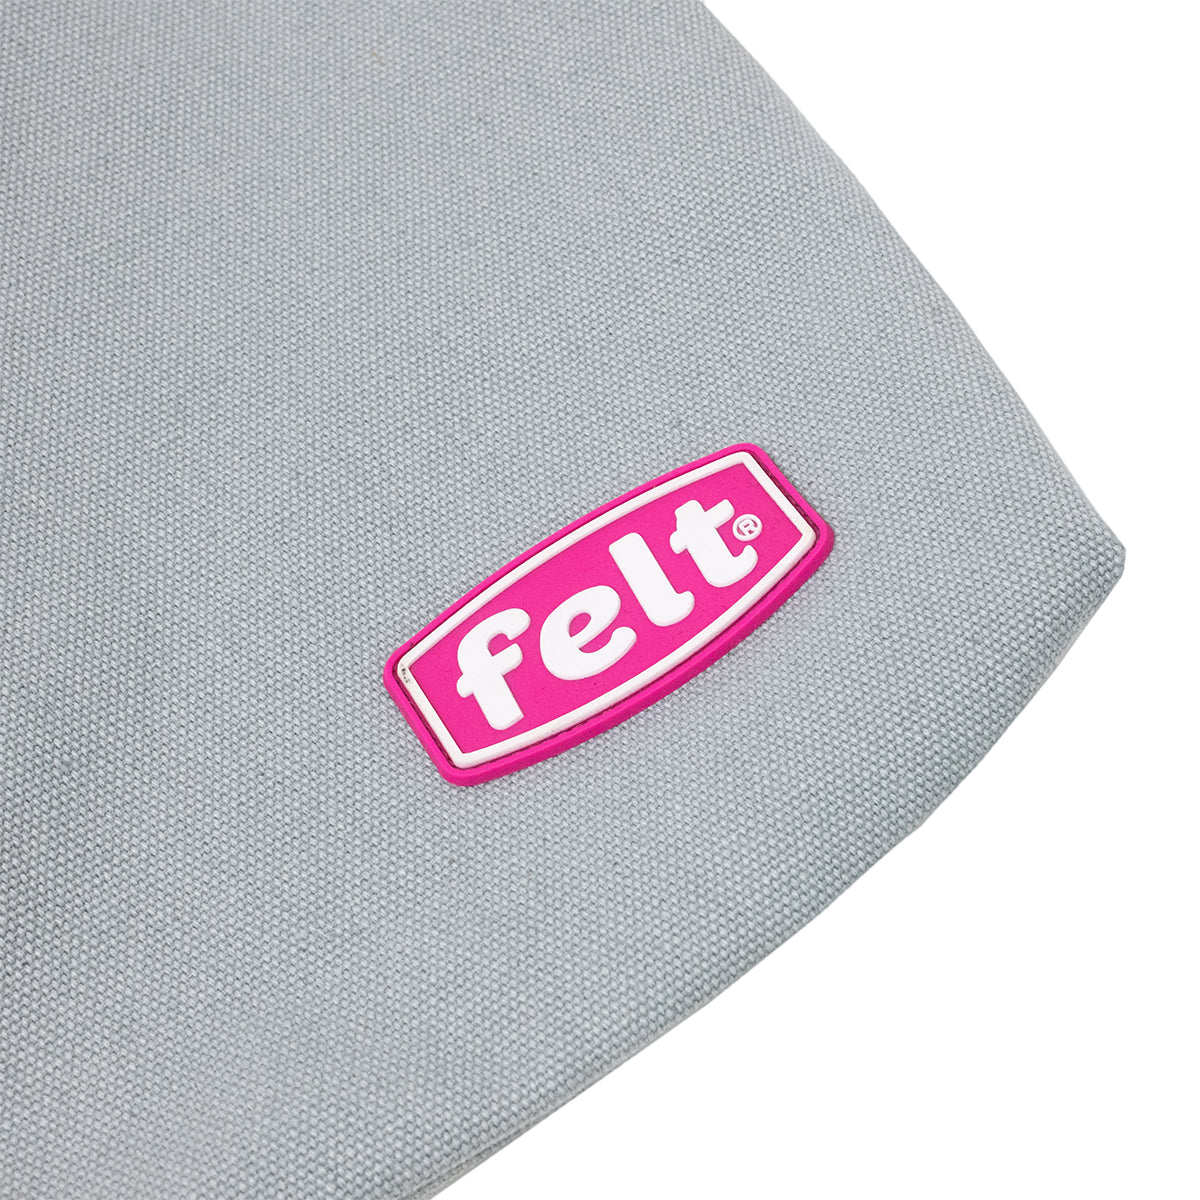 felt - Felt - Logo Tote Bag - Teal